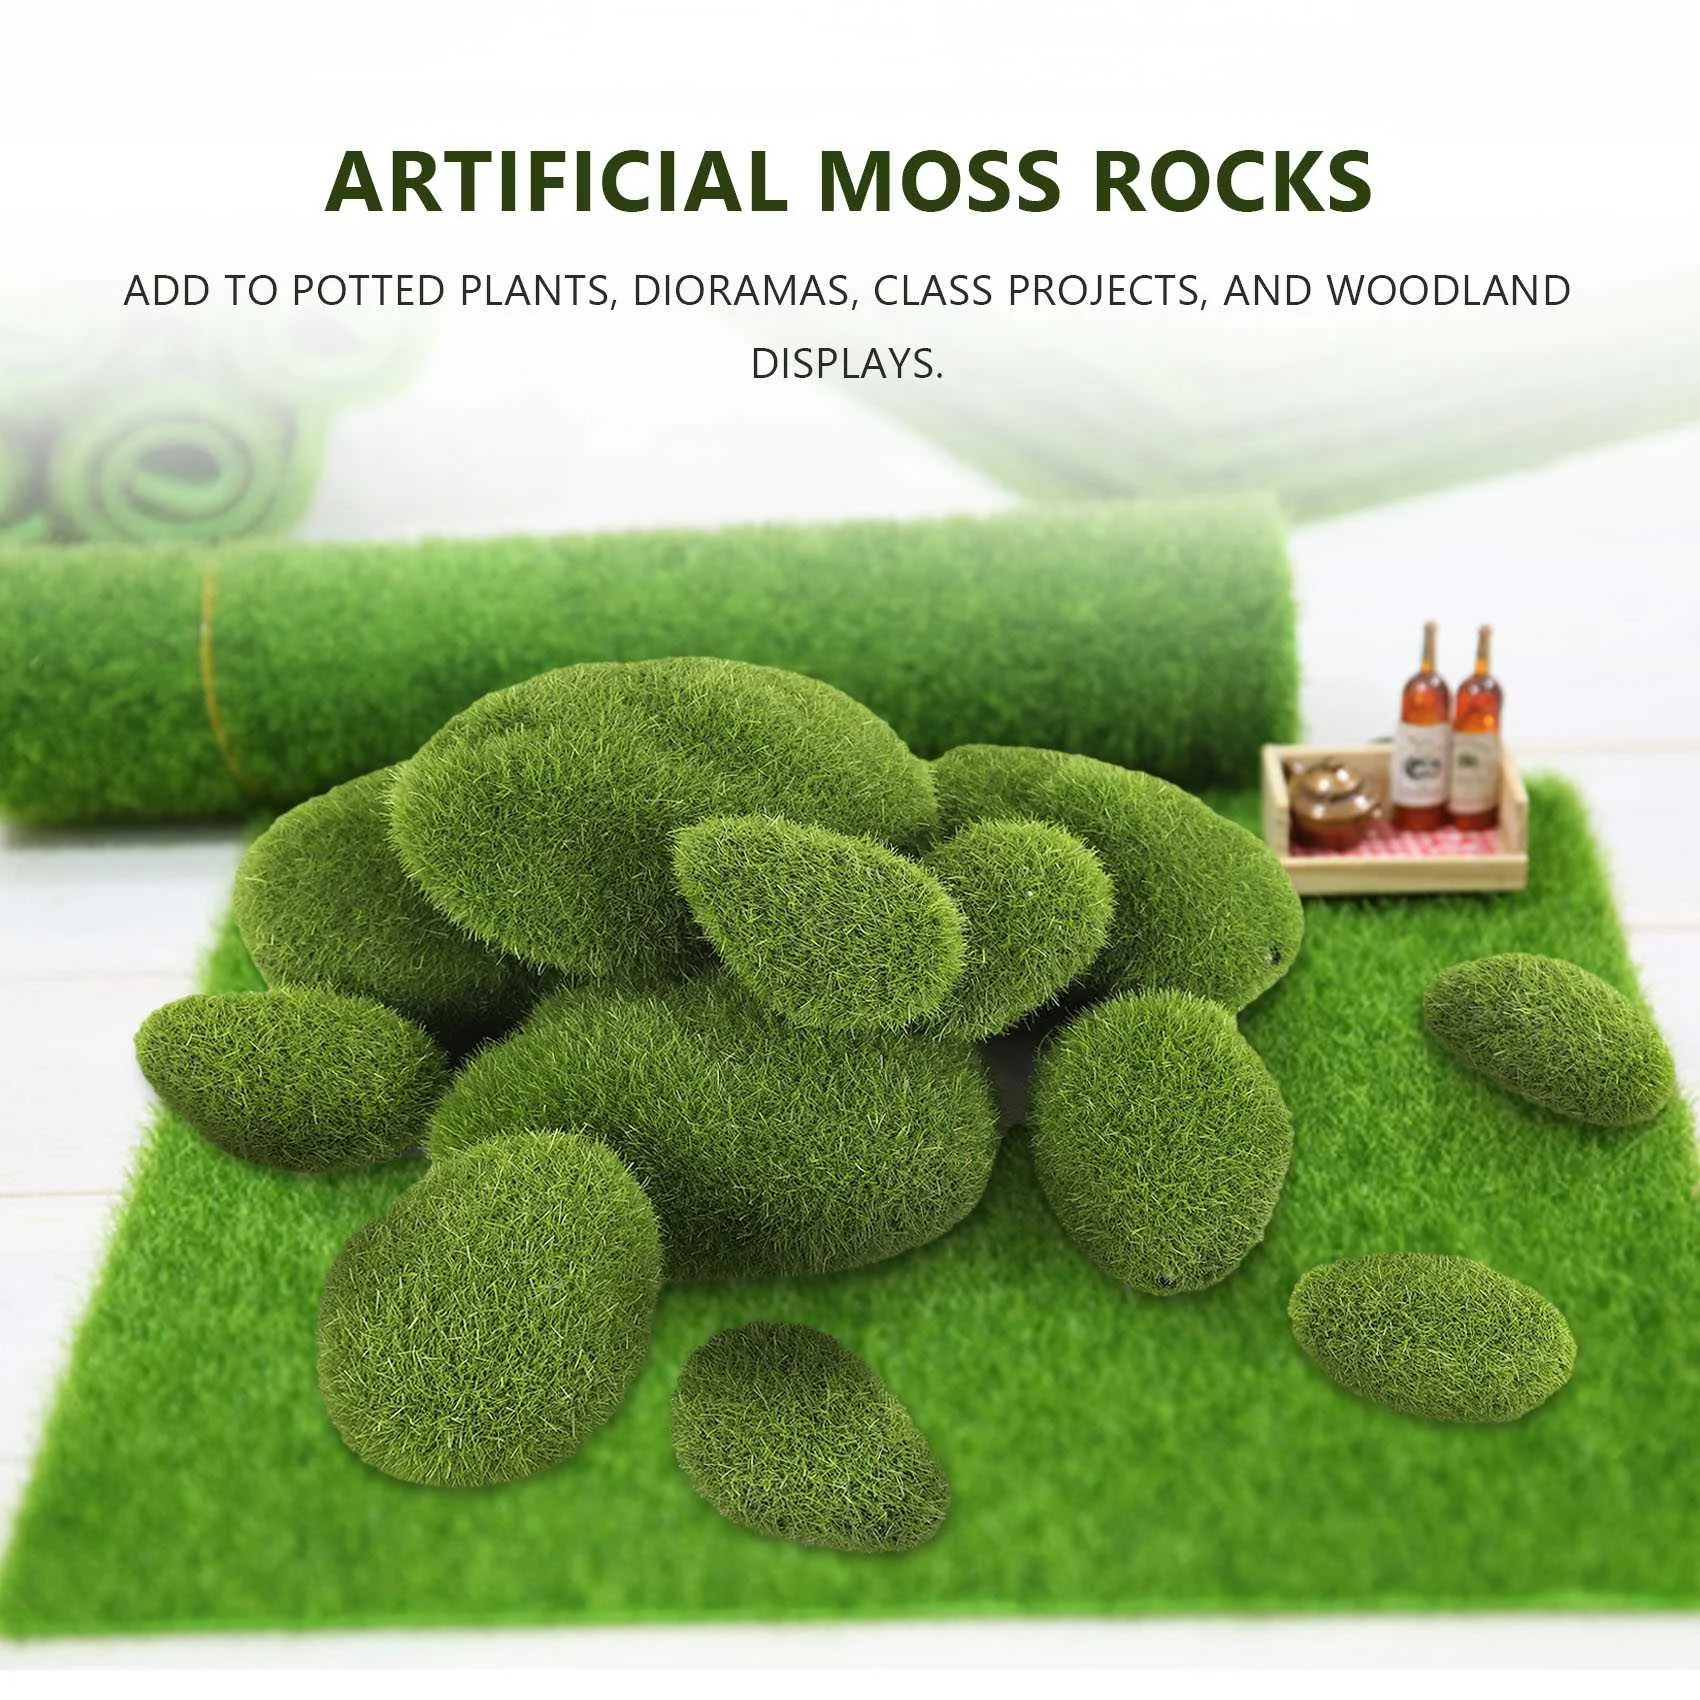 

30PCS 3 Size Artificial Moss Rocks Decorative, Green Moss Balls,for Floral Arrangements Gardens and Crafting